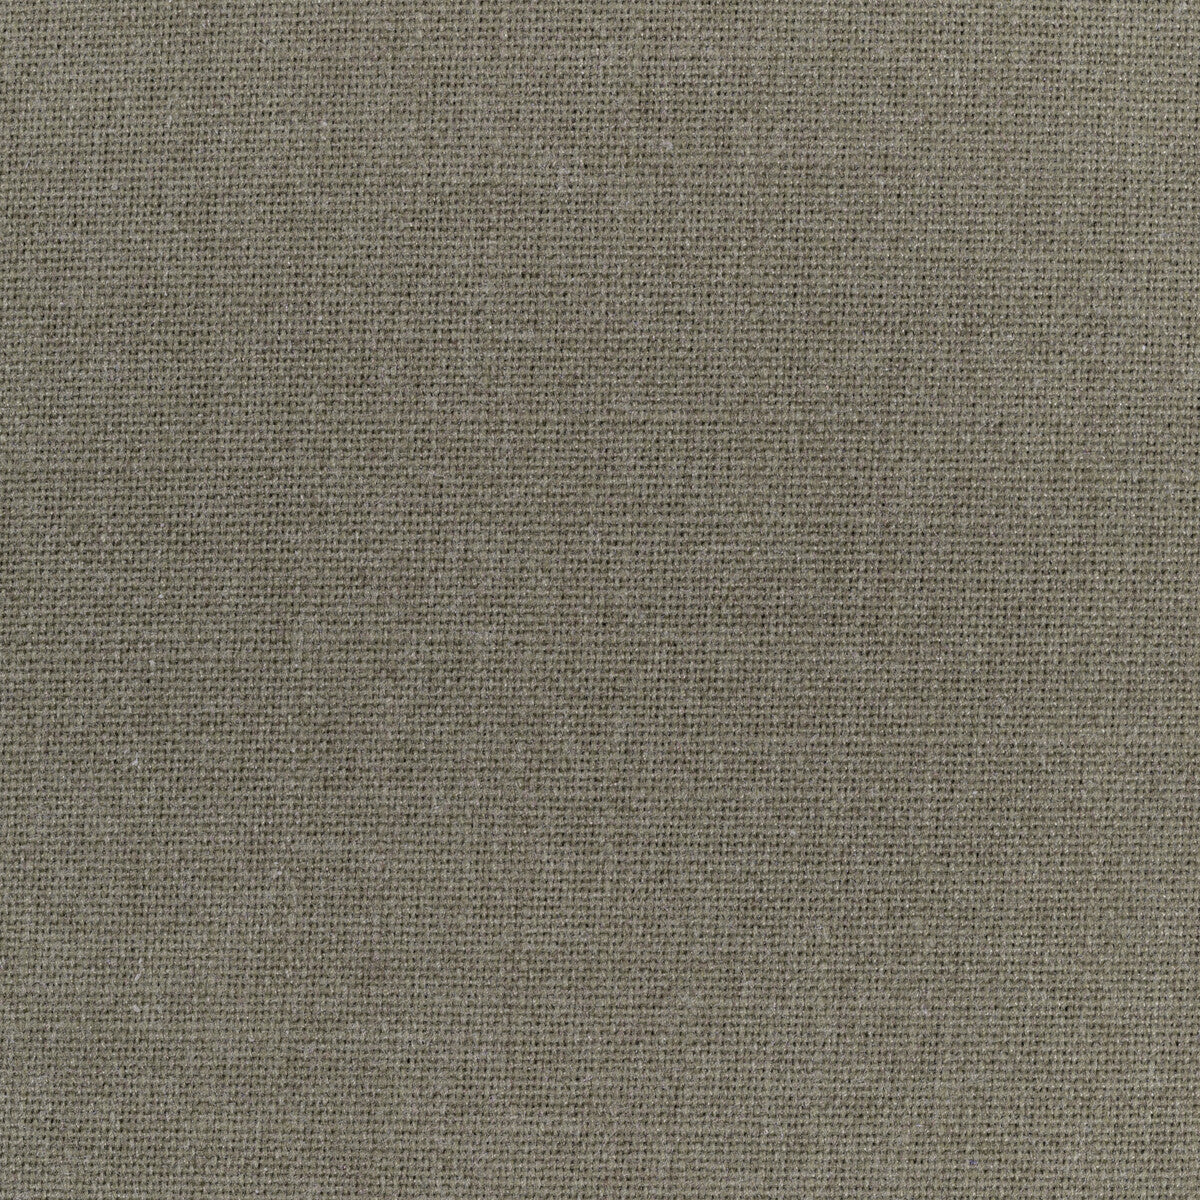 Kravet Smart fabric in 36112-611 color - pattern 36112.611.0 - by Kravet Smart in the Performance Kravetarmor collection